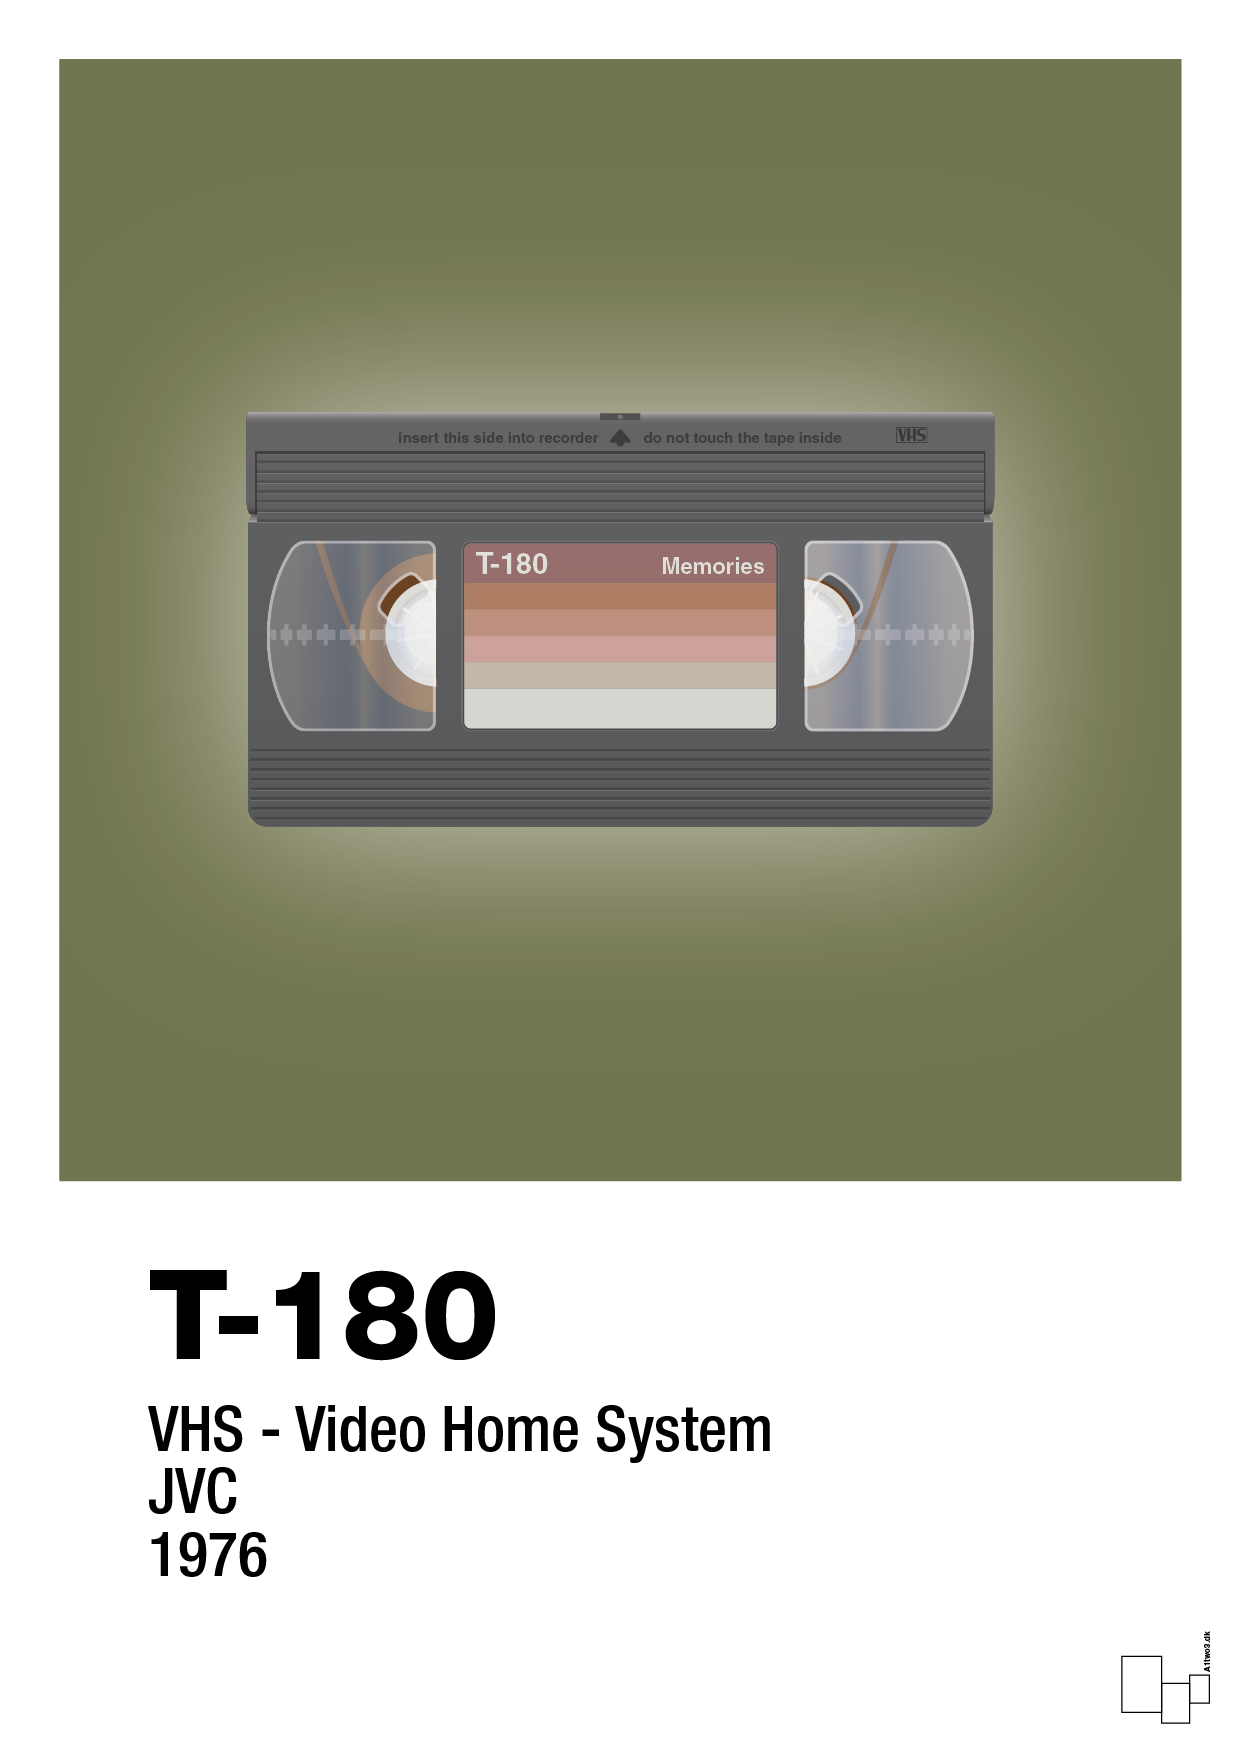 videobånd t-180 - Plakat med Grafik i Secret Meadow